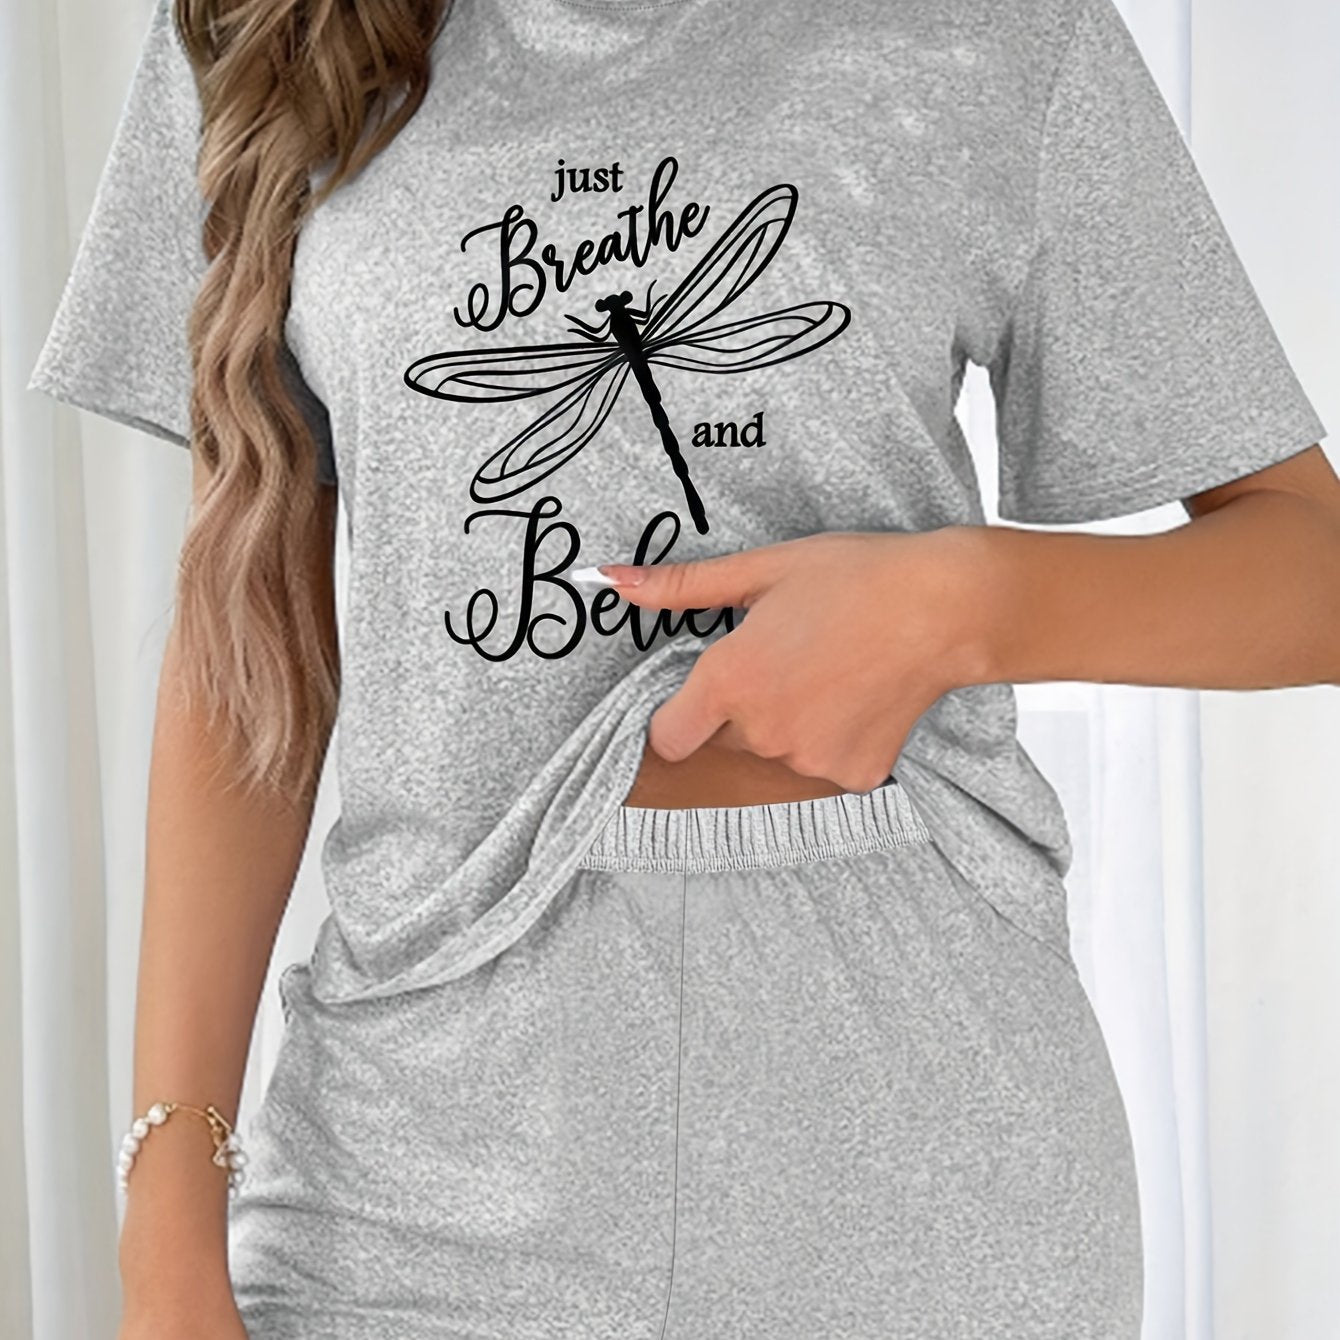 Just Breathe And Believe Women's Christian Short Pajama Set claimedbygoddesigns